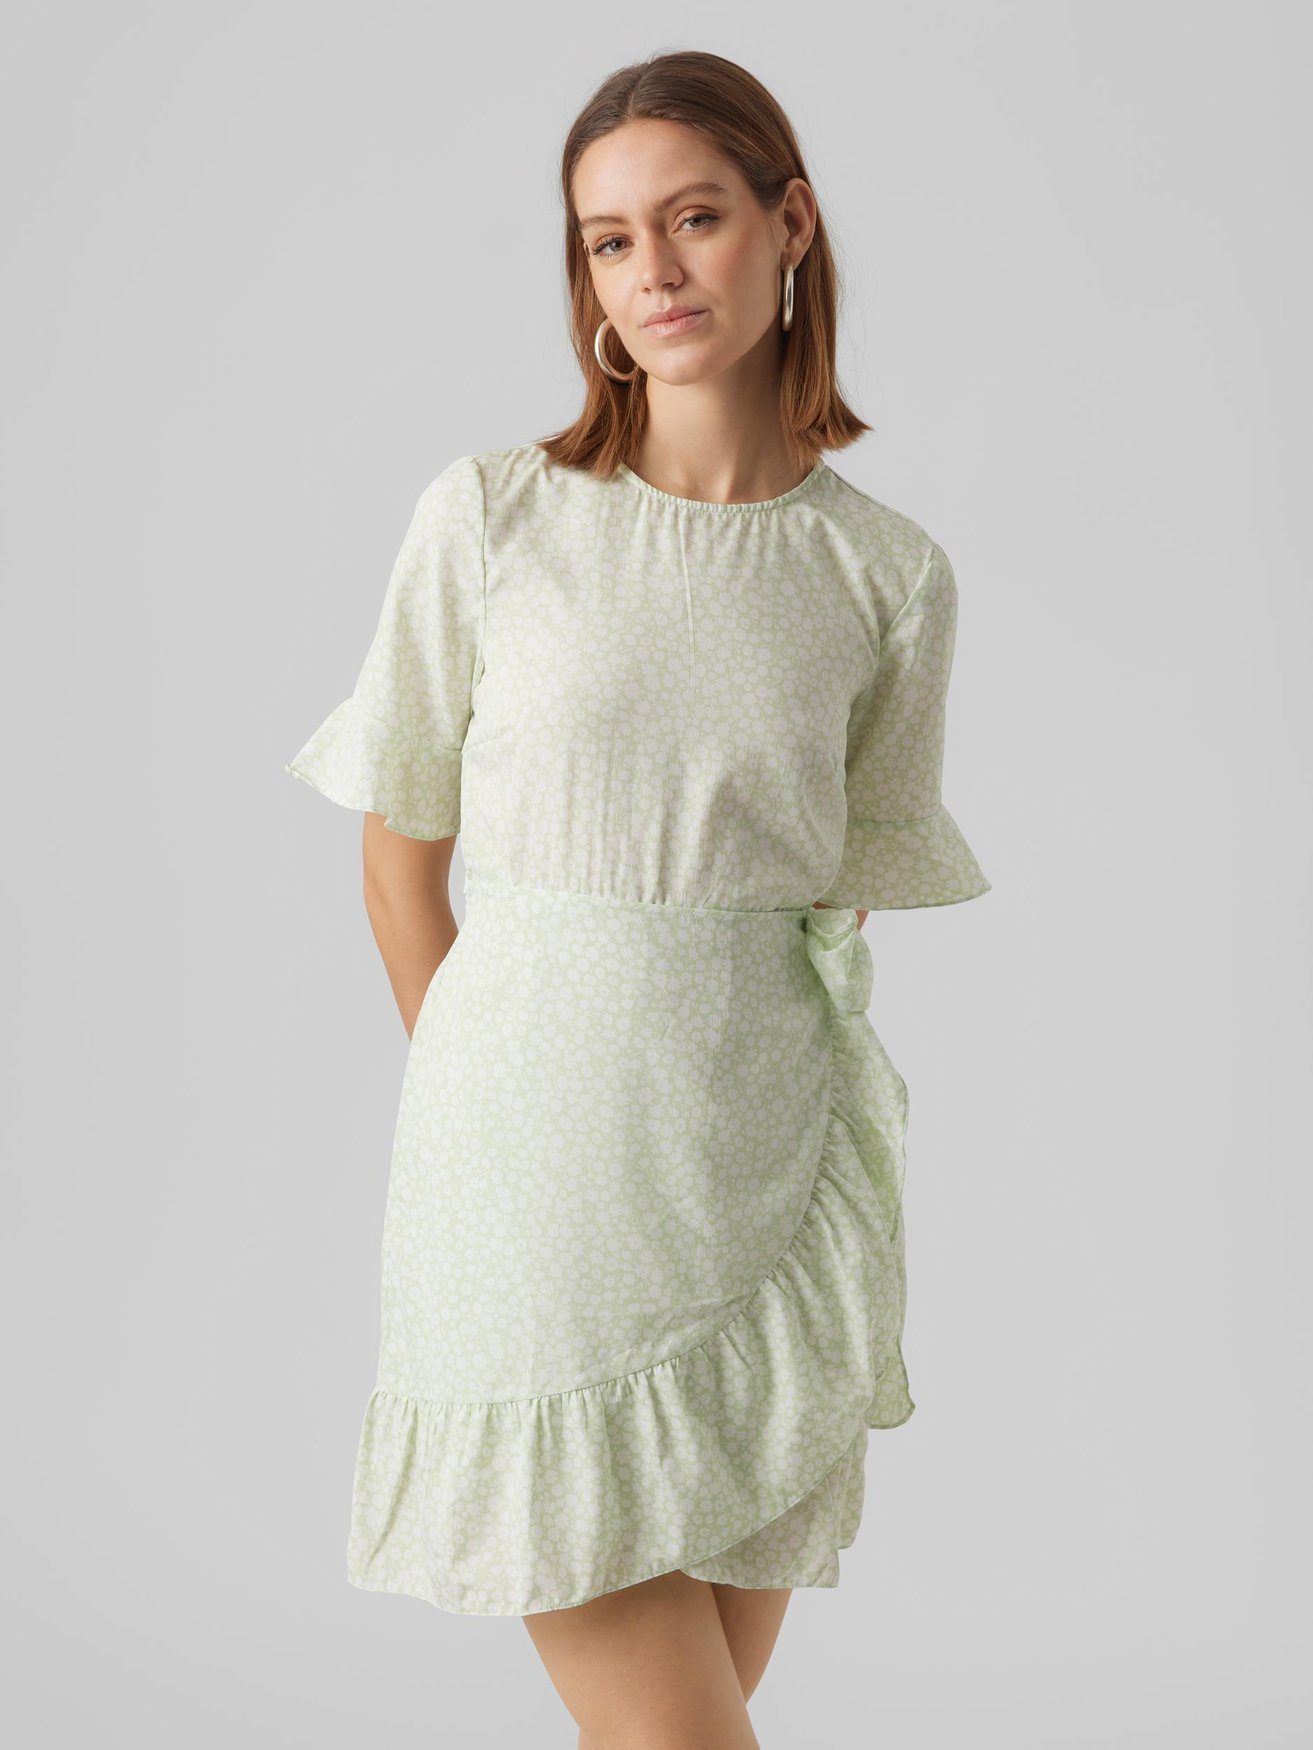 Kurzes Wickel Vero in VMHENNA (kurz) Shirtkleid 5775 Kleid Mini Moda Grün